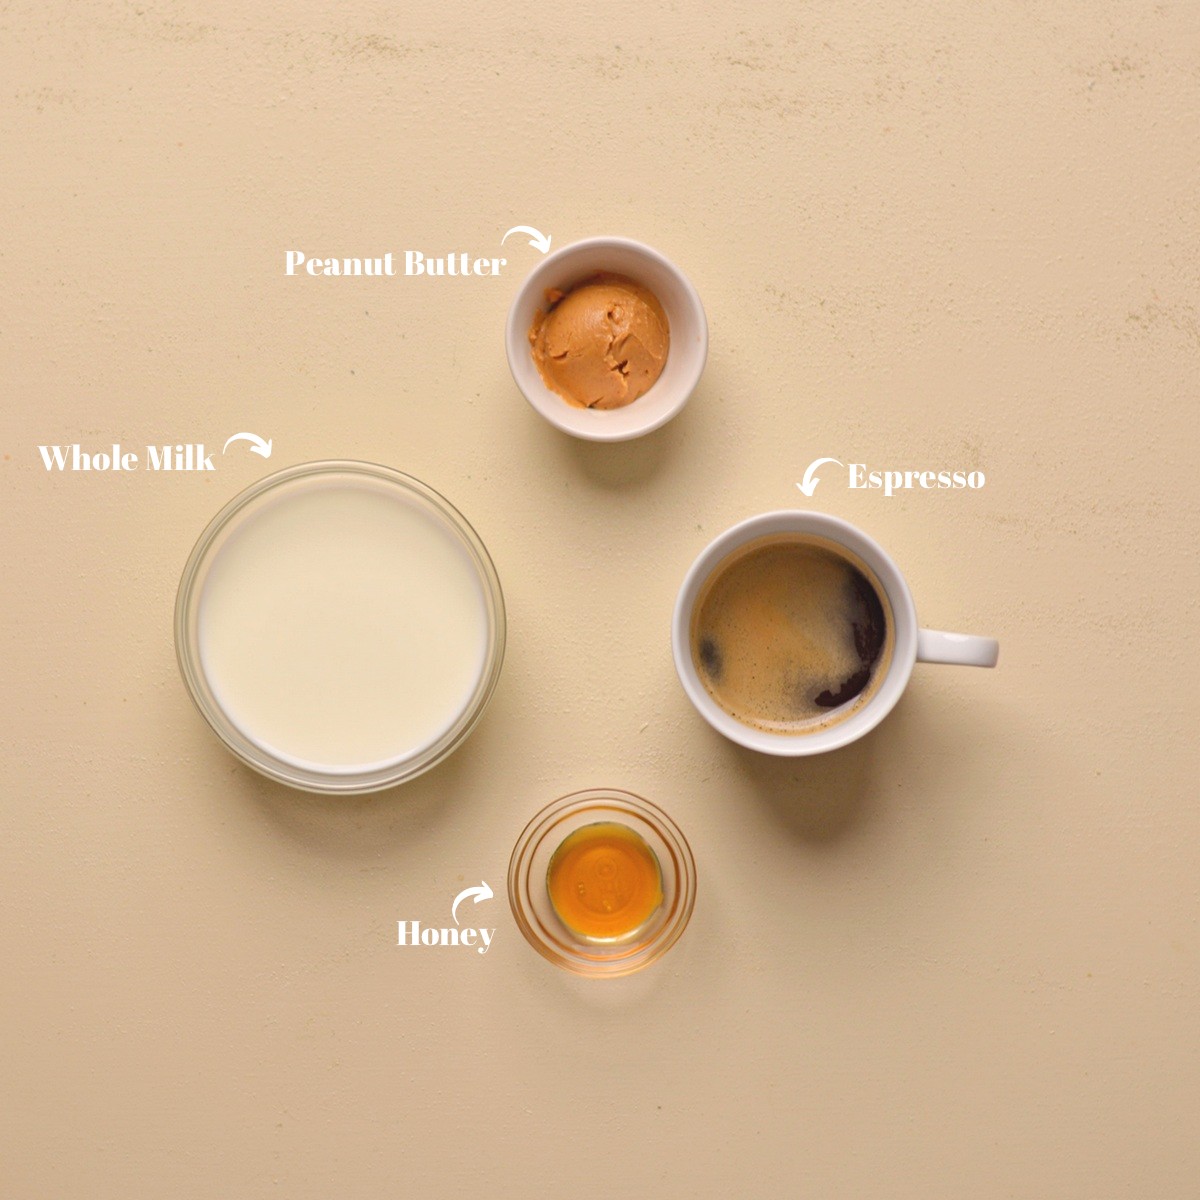 Peanut butter, milk, coffee, and honey.